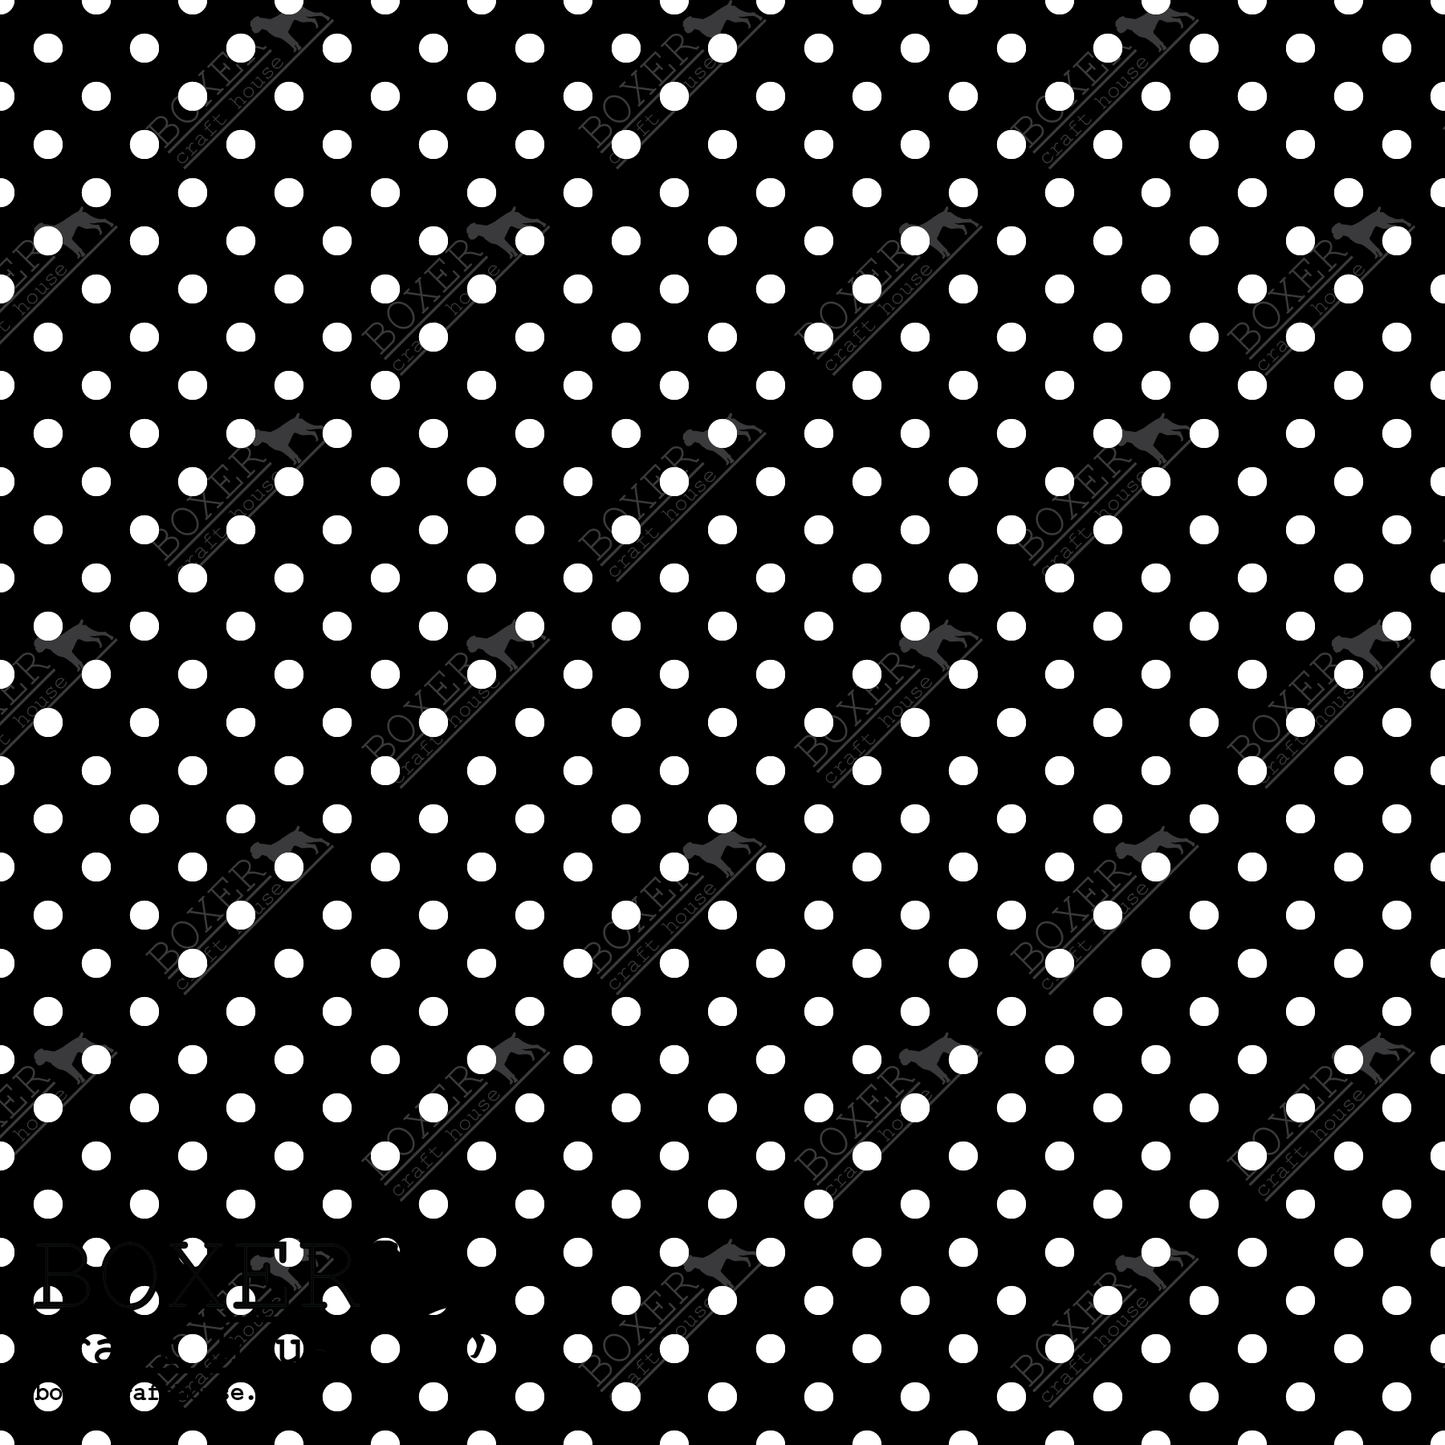 Dots 1/8" - Black